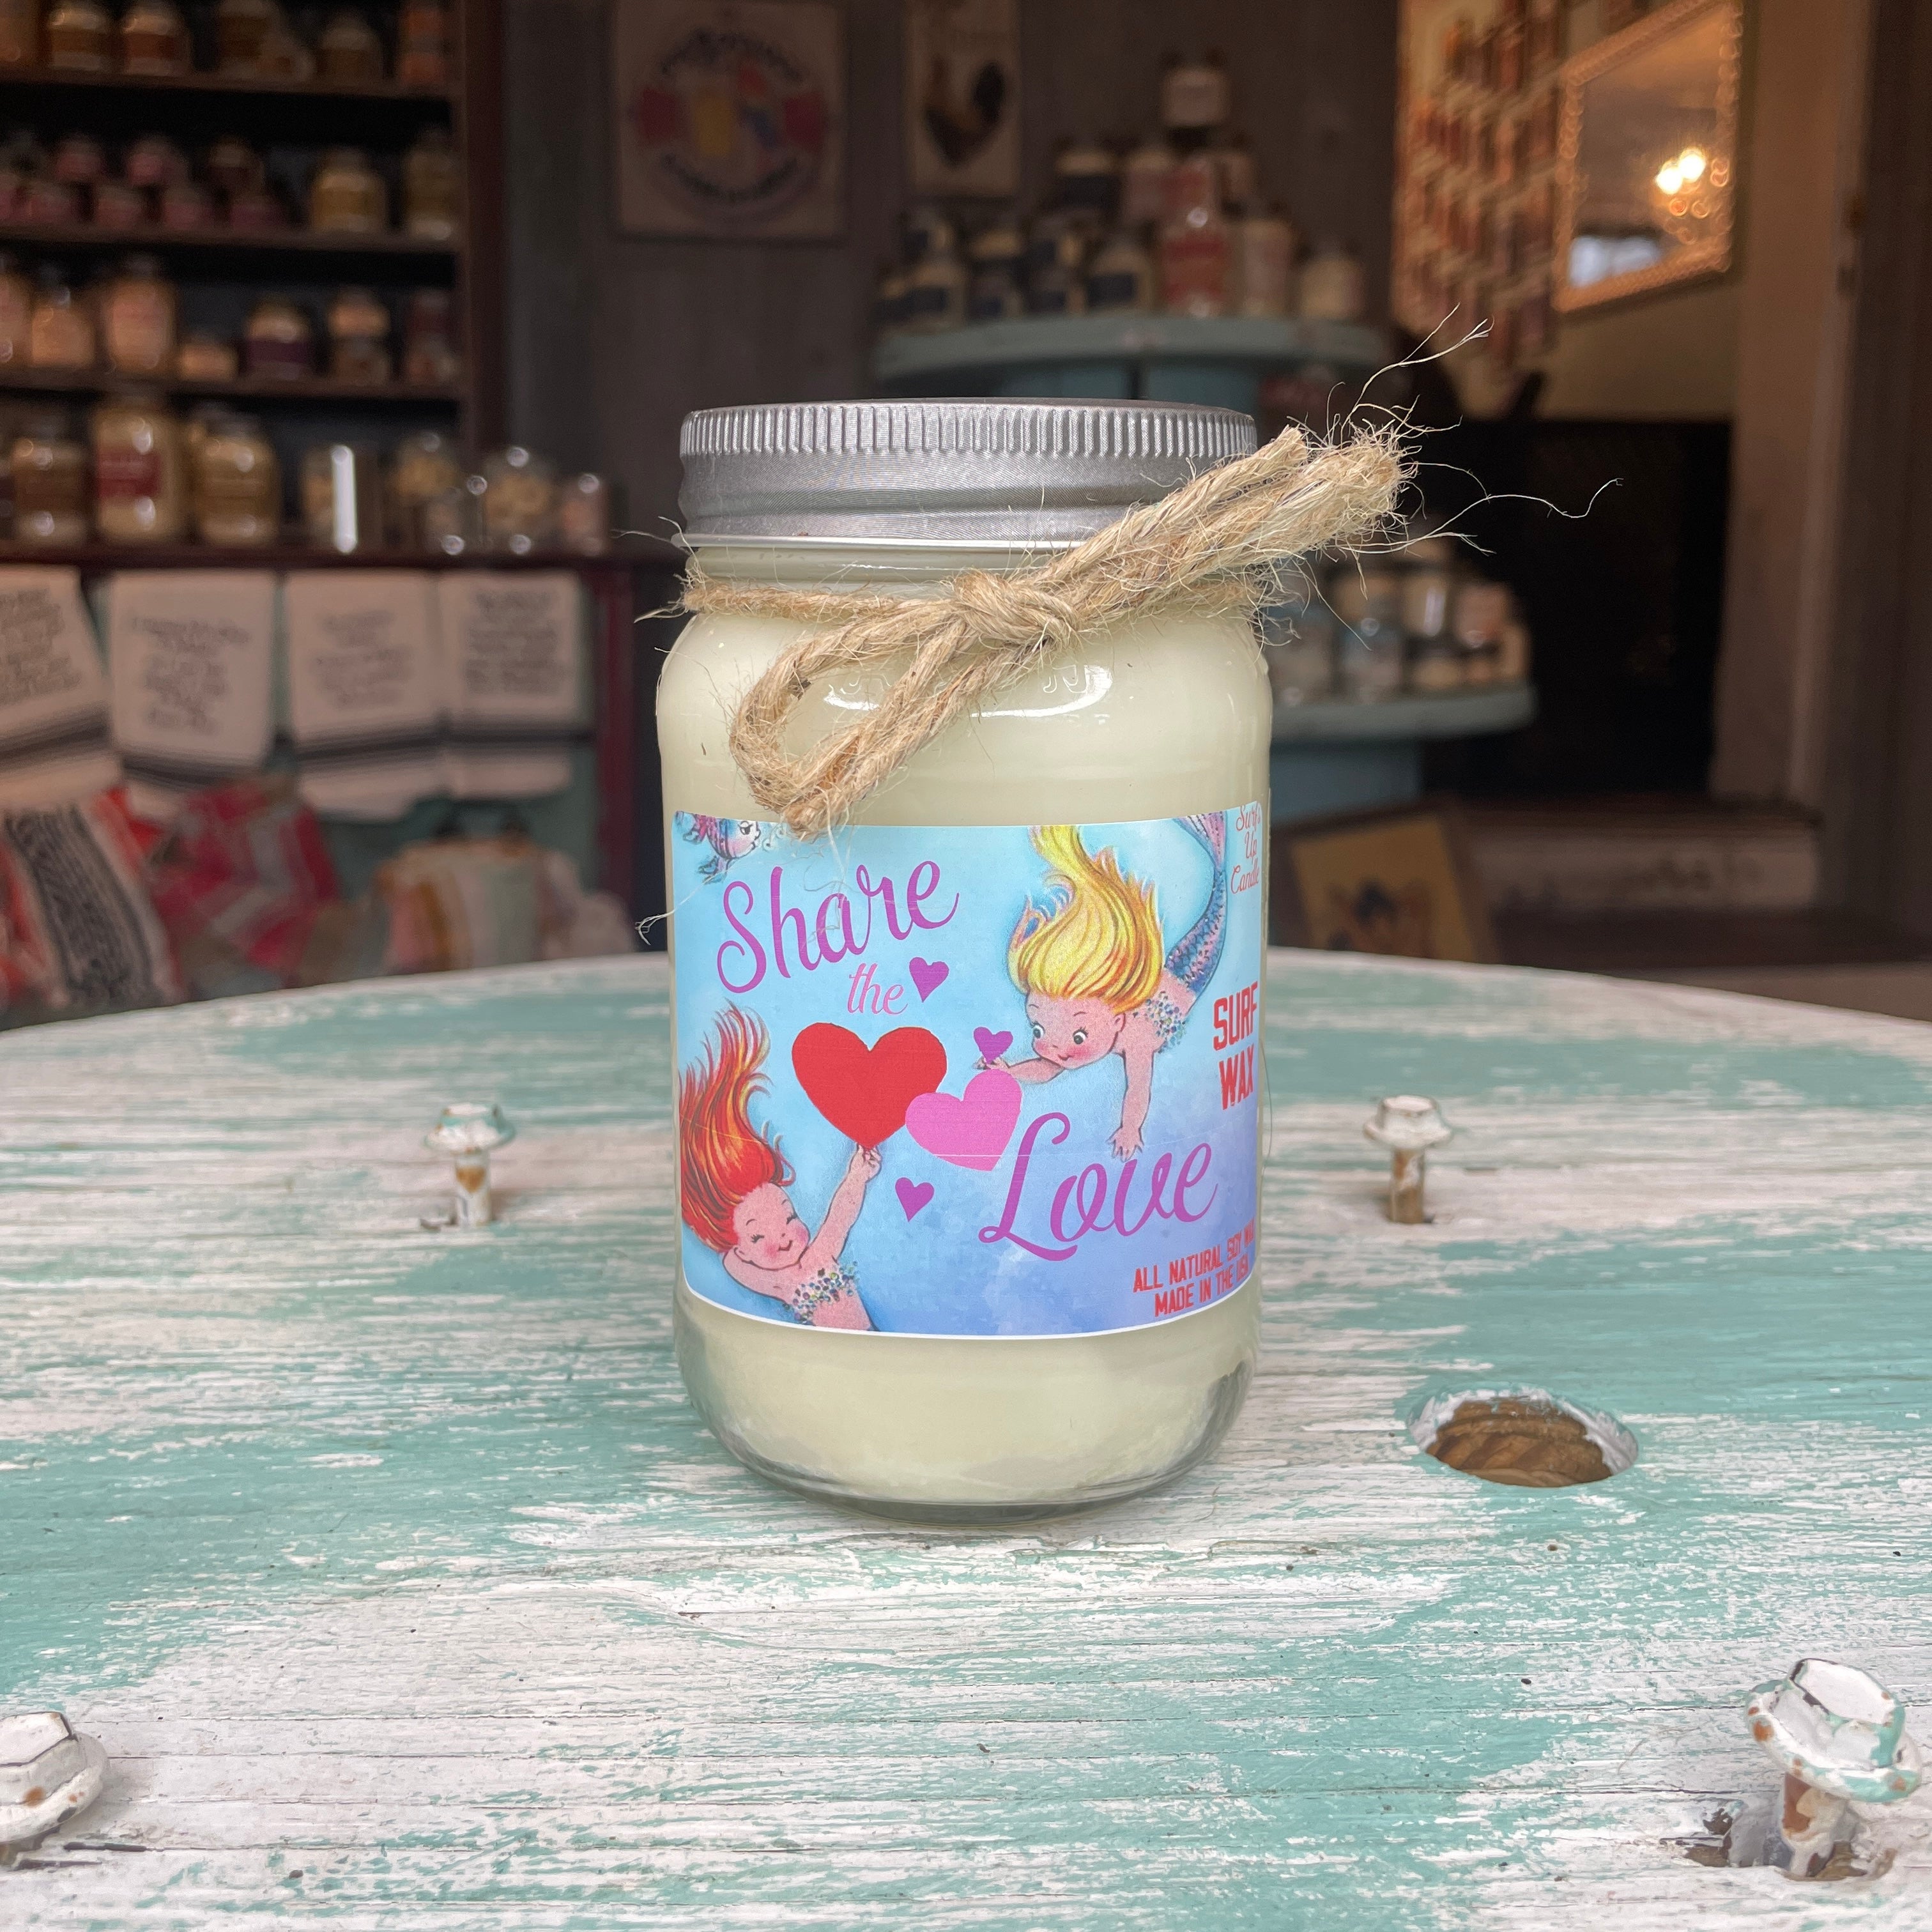 Sidewalk Sale 24  Share the Love Surf Wax Mason Jar Candle - Valentine Collection